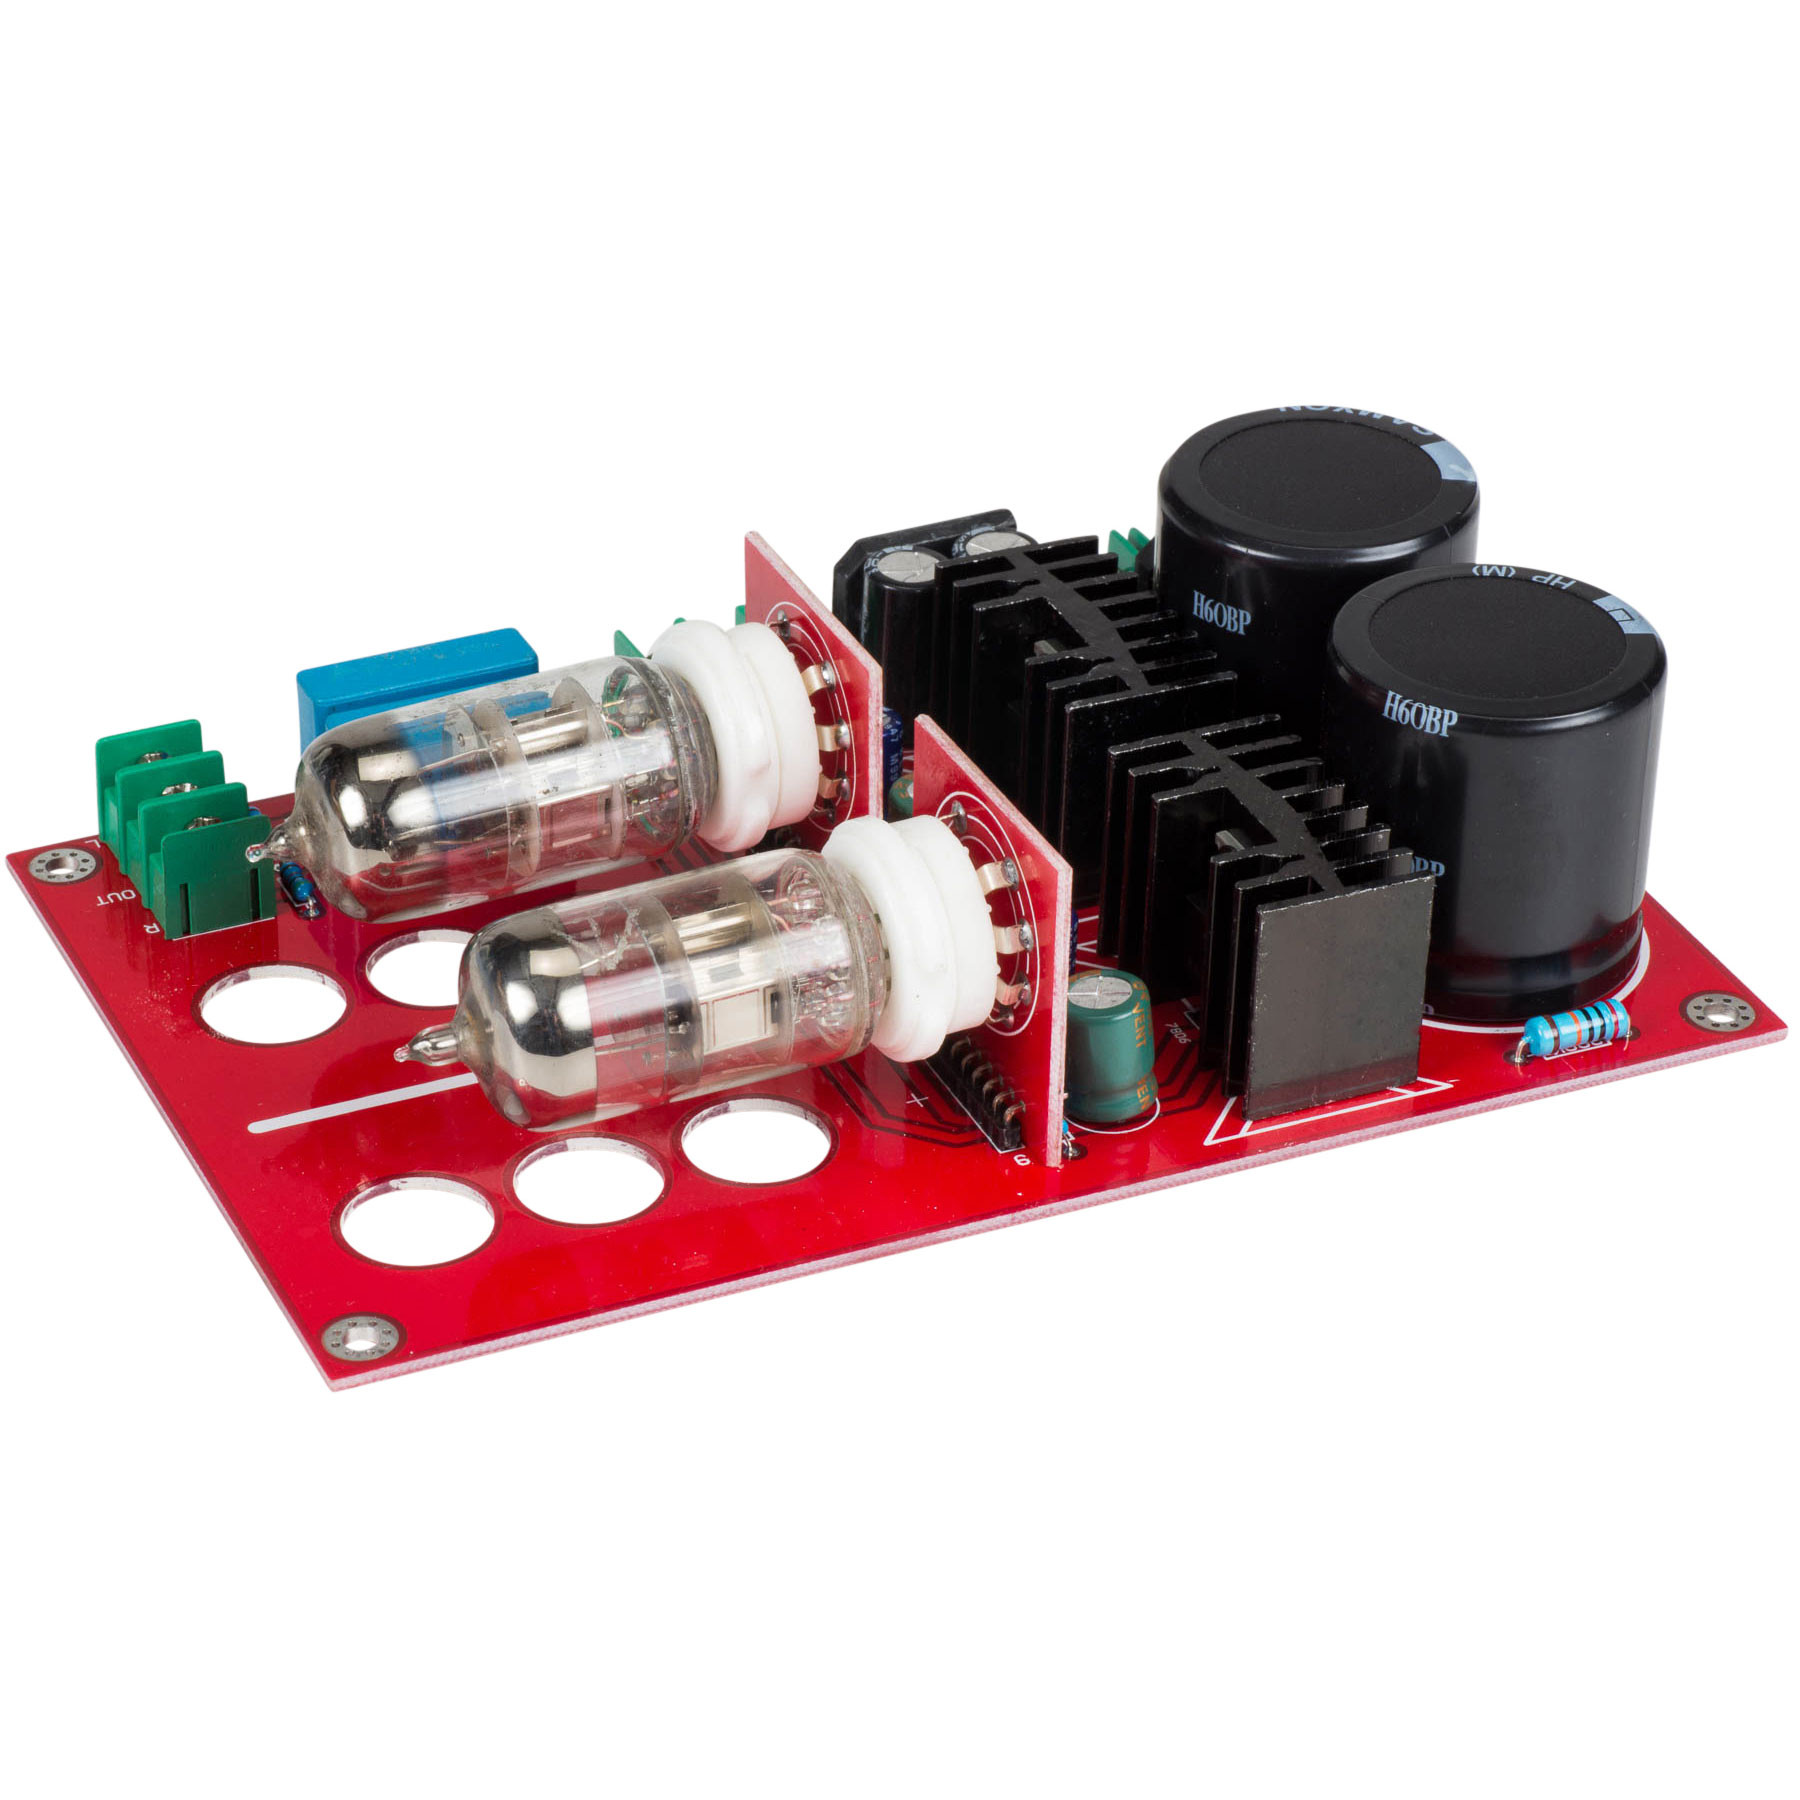 DIY Stereo Tube Amp Kits
 Yuan Jing Pre and Tube Amplifier Kit 6N2 SRPP for DIY